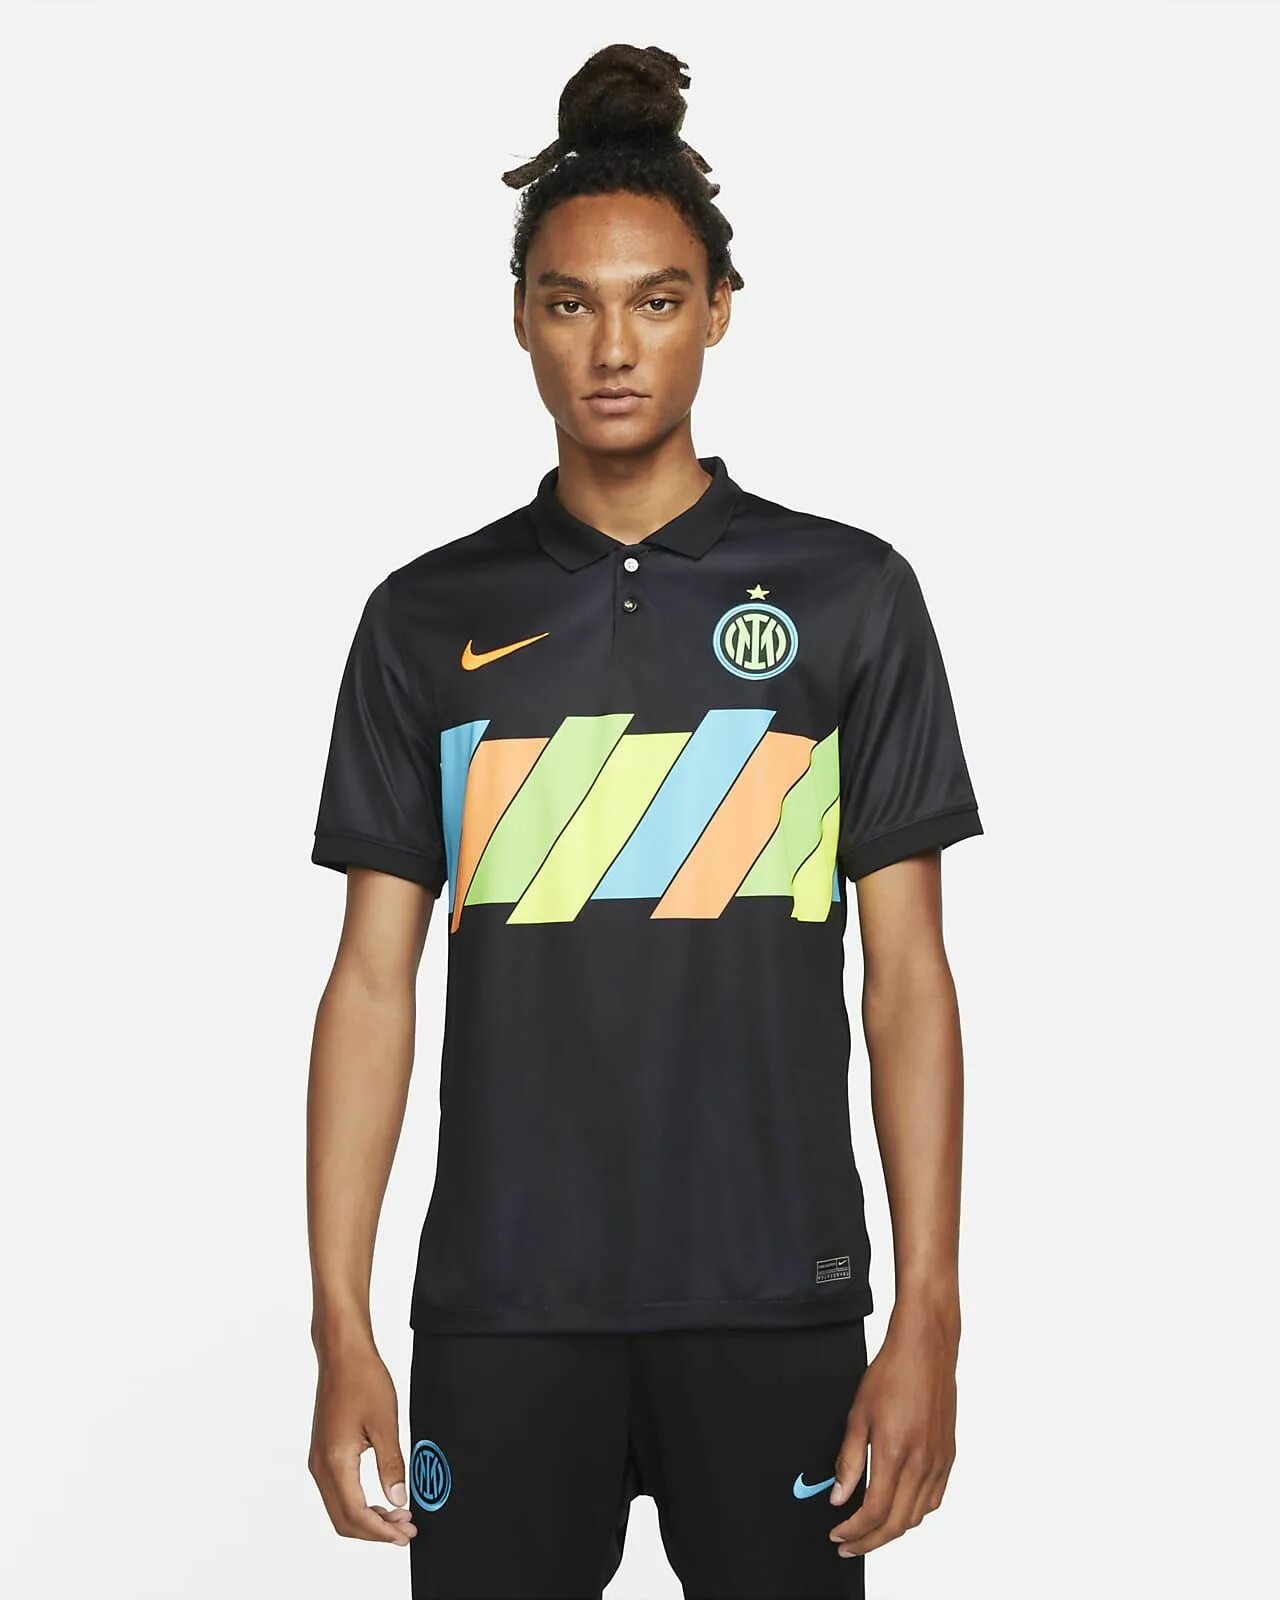 Inter black. Nike Inter Milan футболка. Футболка ФК Интер 2012. Черная футболка Milan.